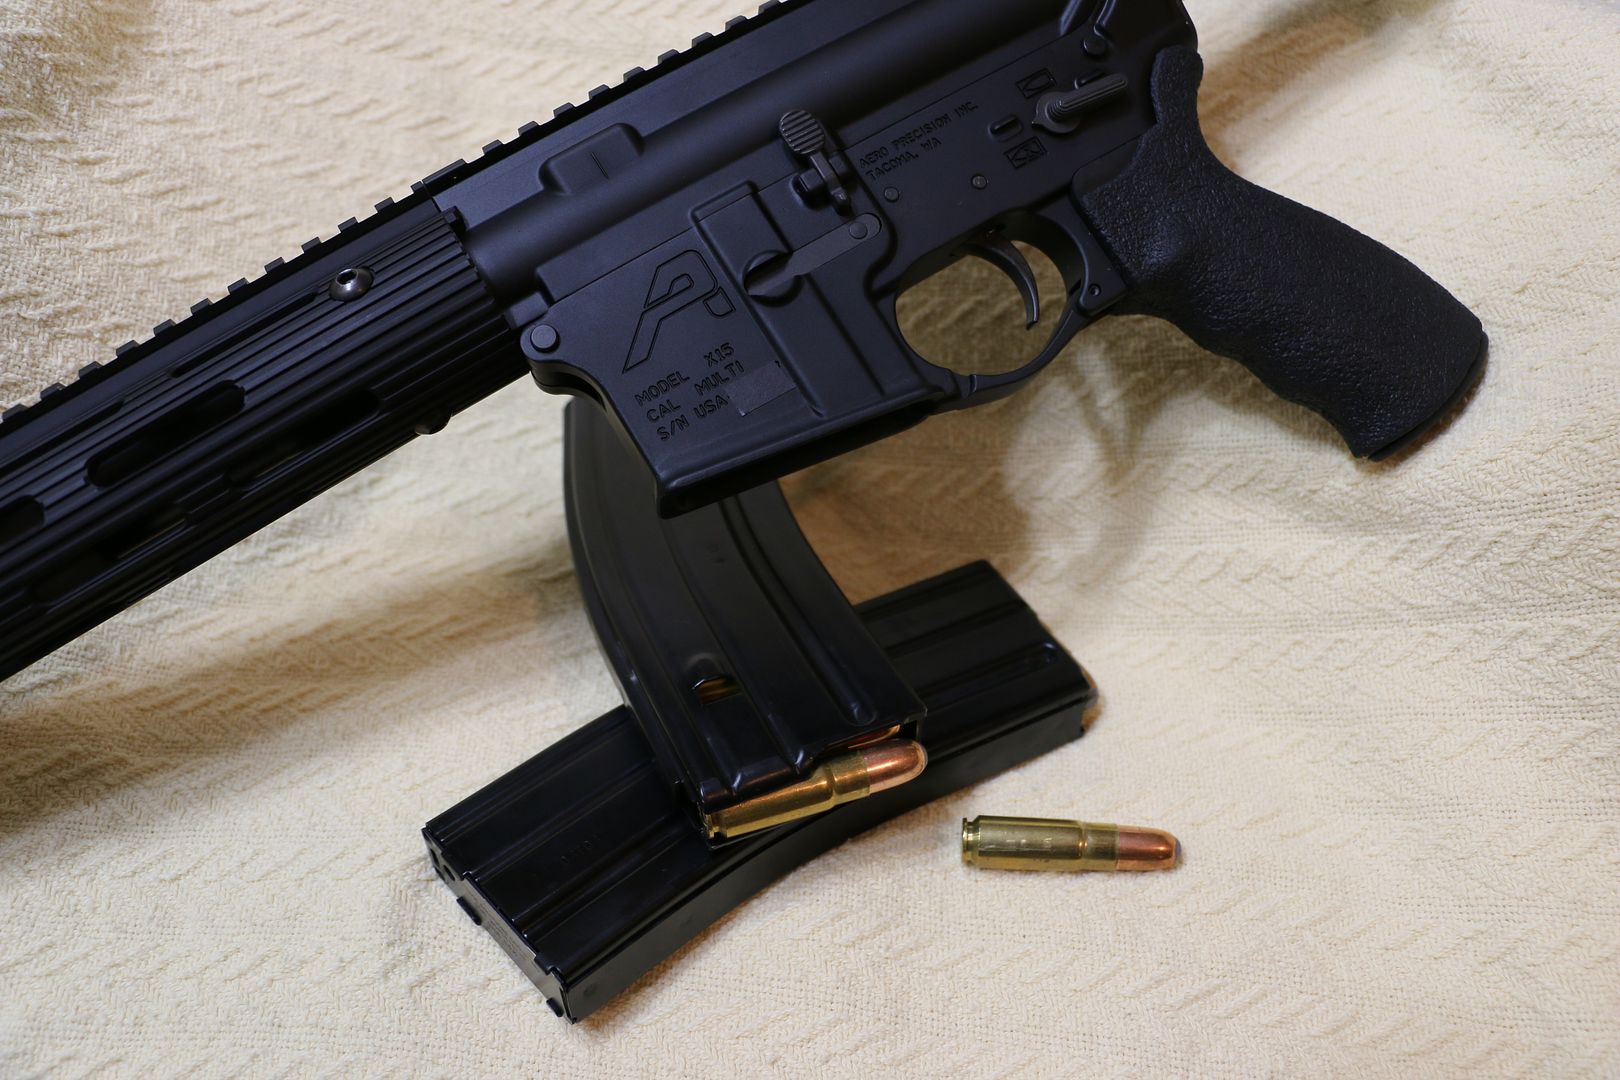 458 Socom AR pistol for sale. 